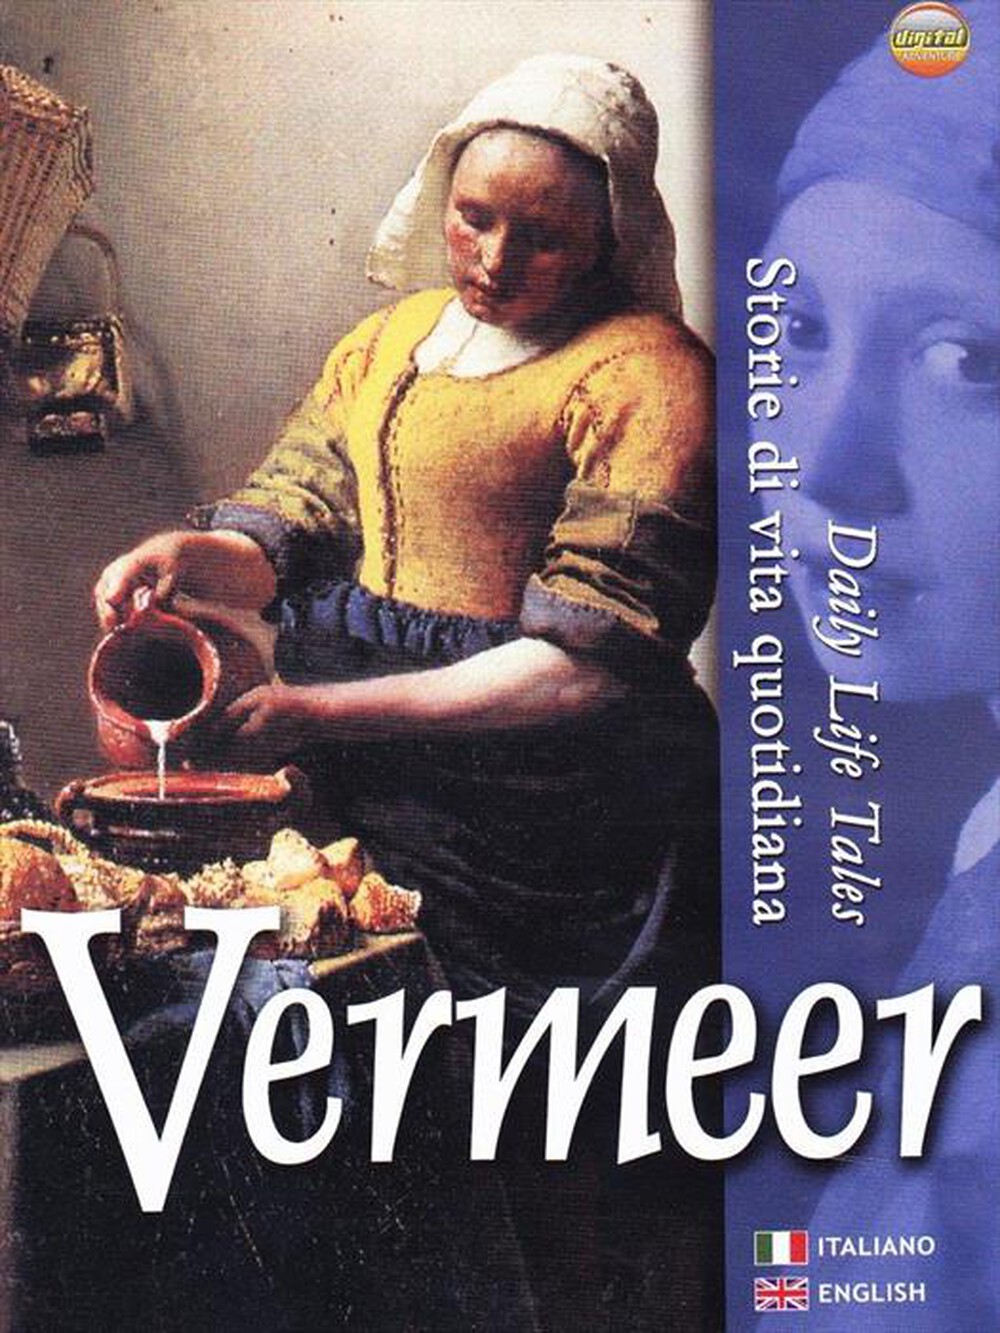 "CINEHOLLYWOOD - Vermeer - Storie Di Vita Quotidiana"